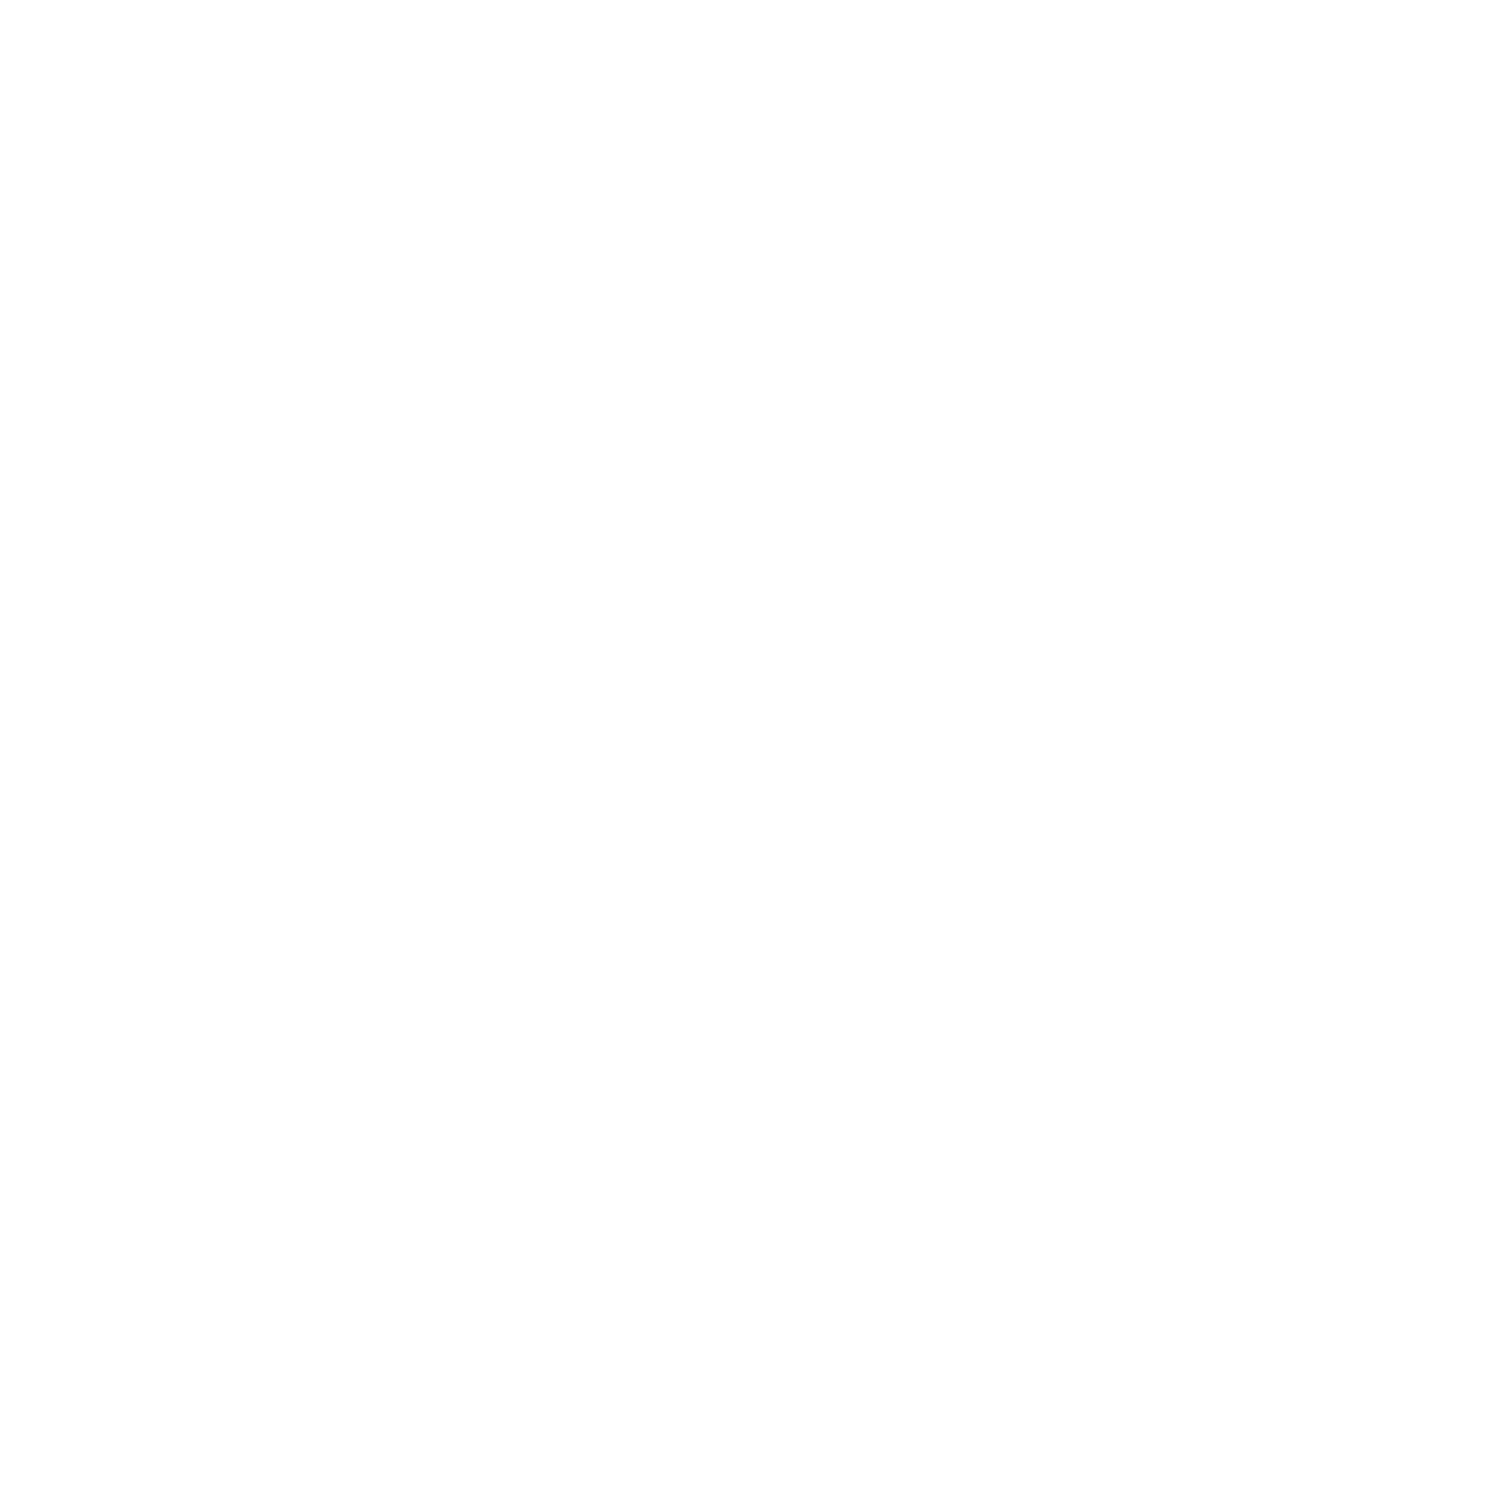 Chef Cory Bahr